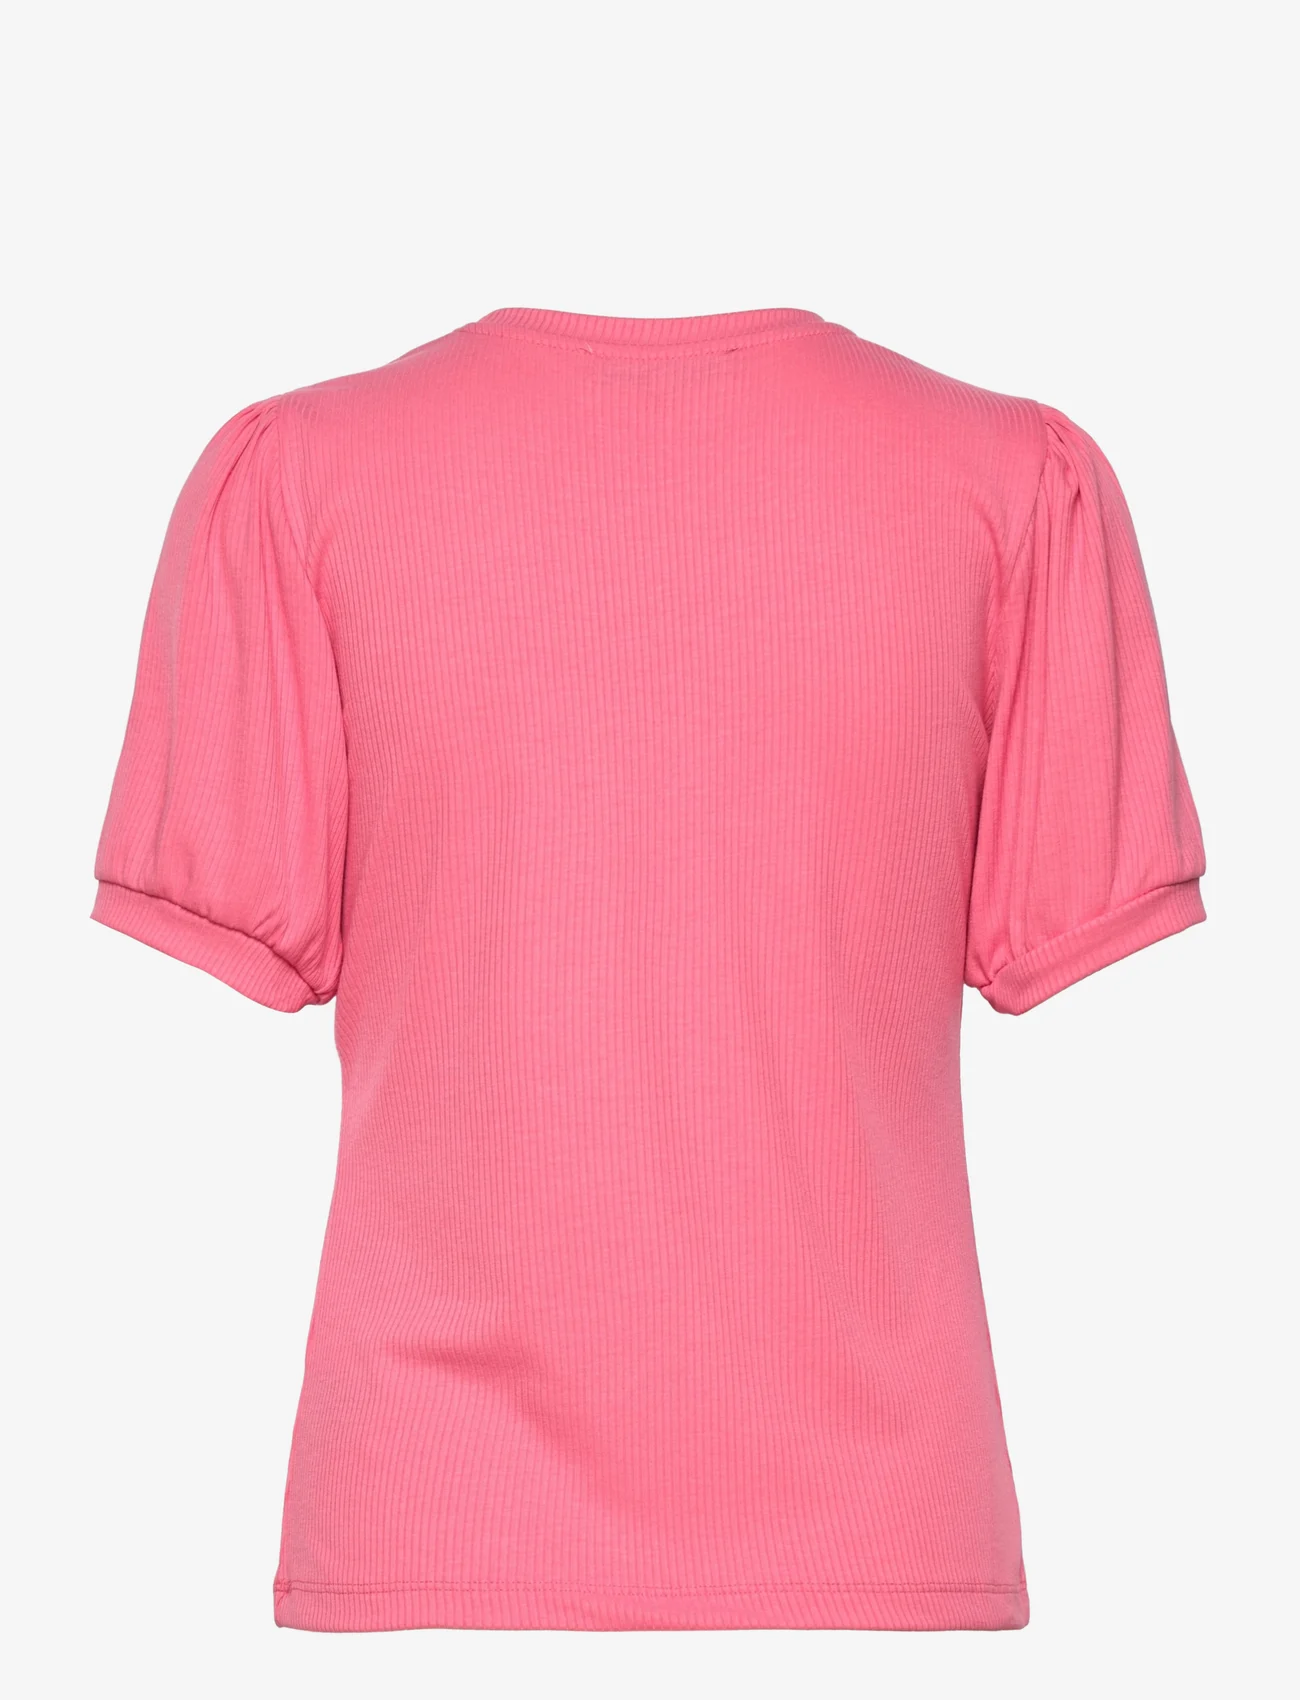 Minus - Johanna T-shirt - lowest prices - pink flamingo - 1